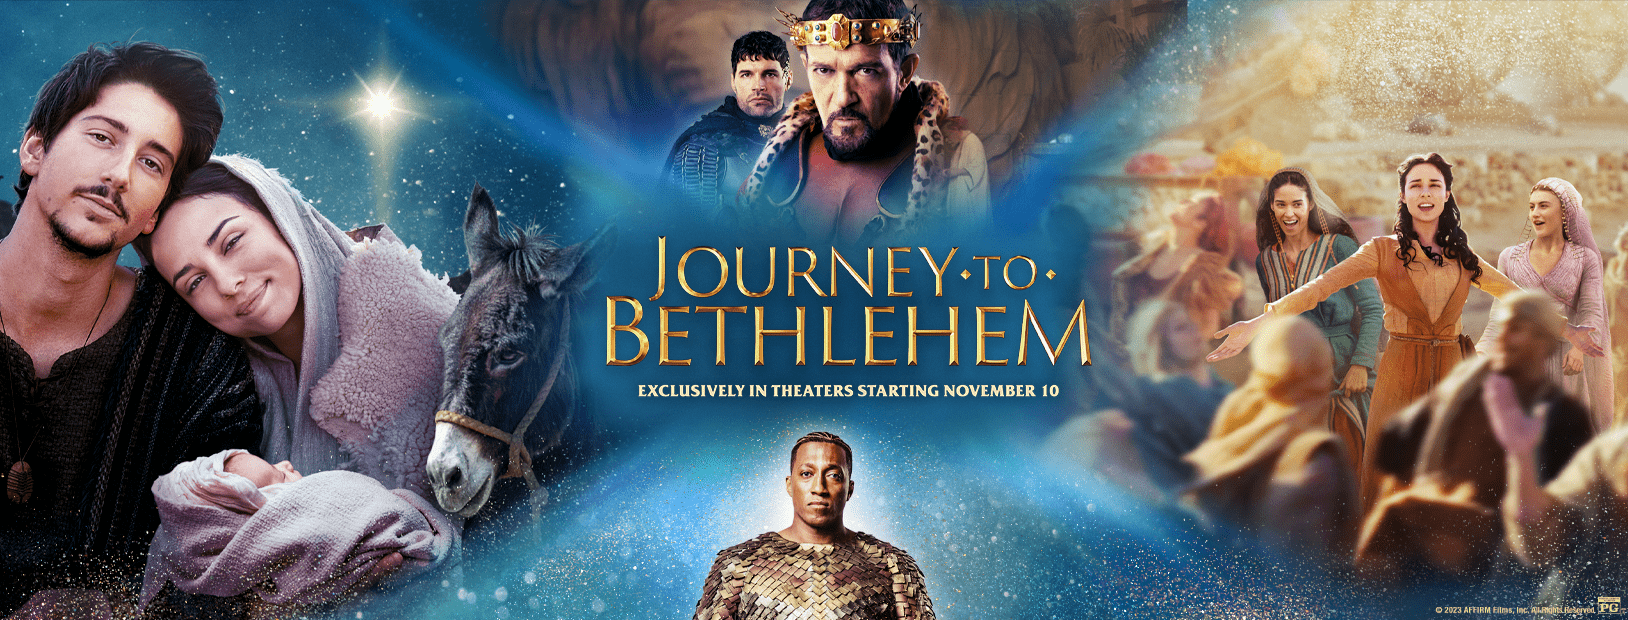 Journey to Bethlehem 